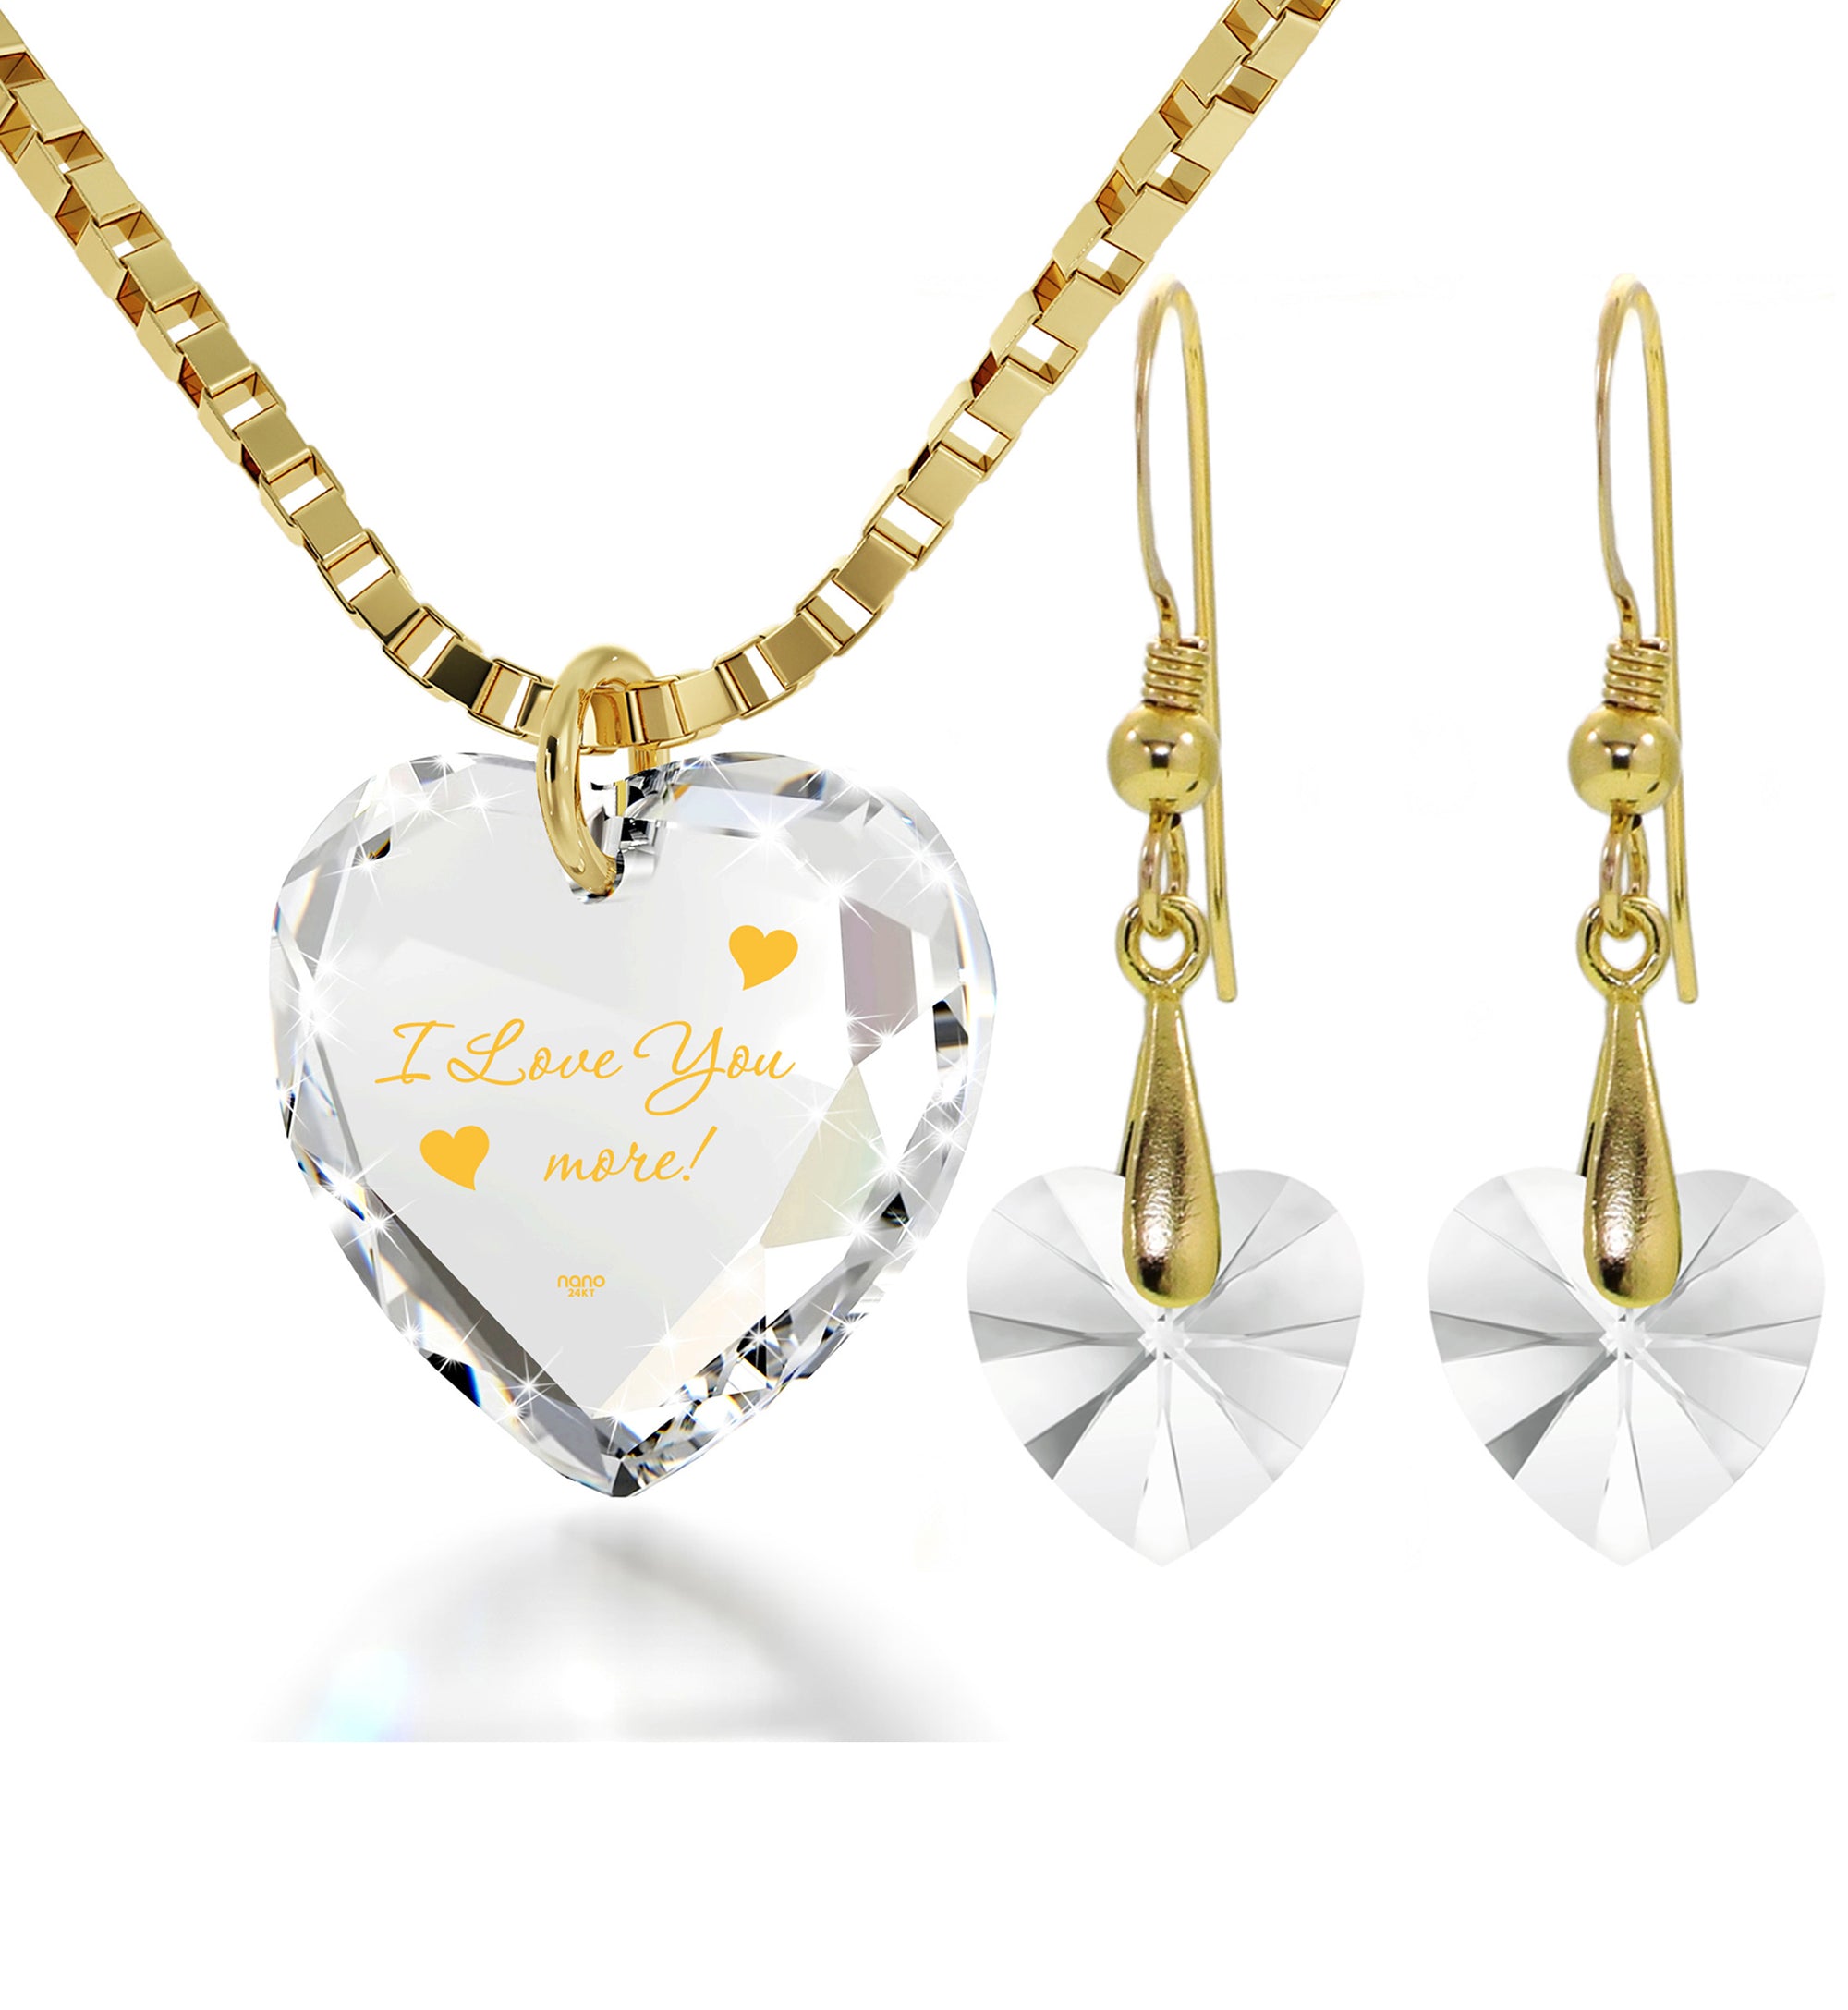 2020 cooper greek necklaces heart shaped| Alibaba.com